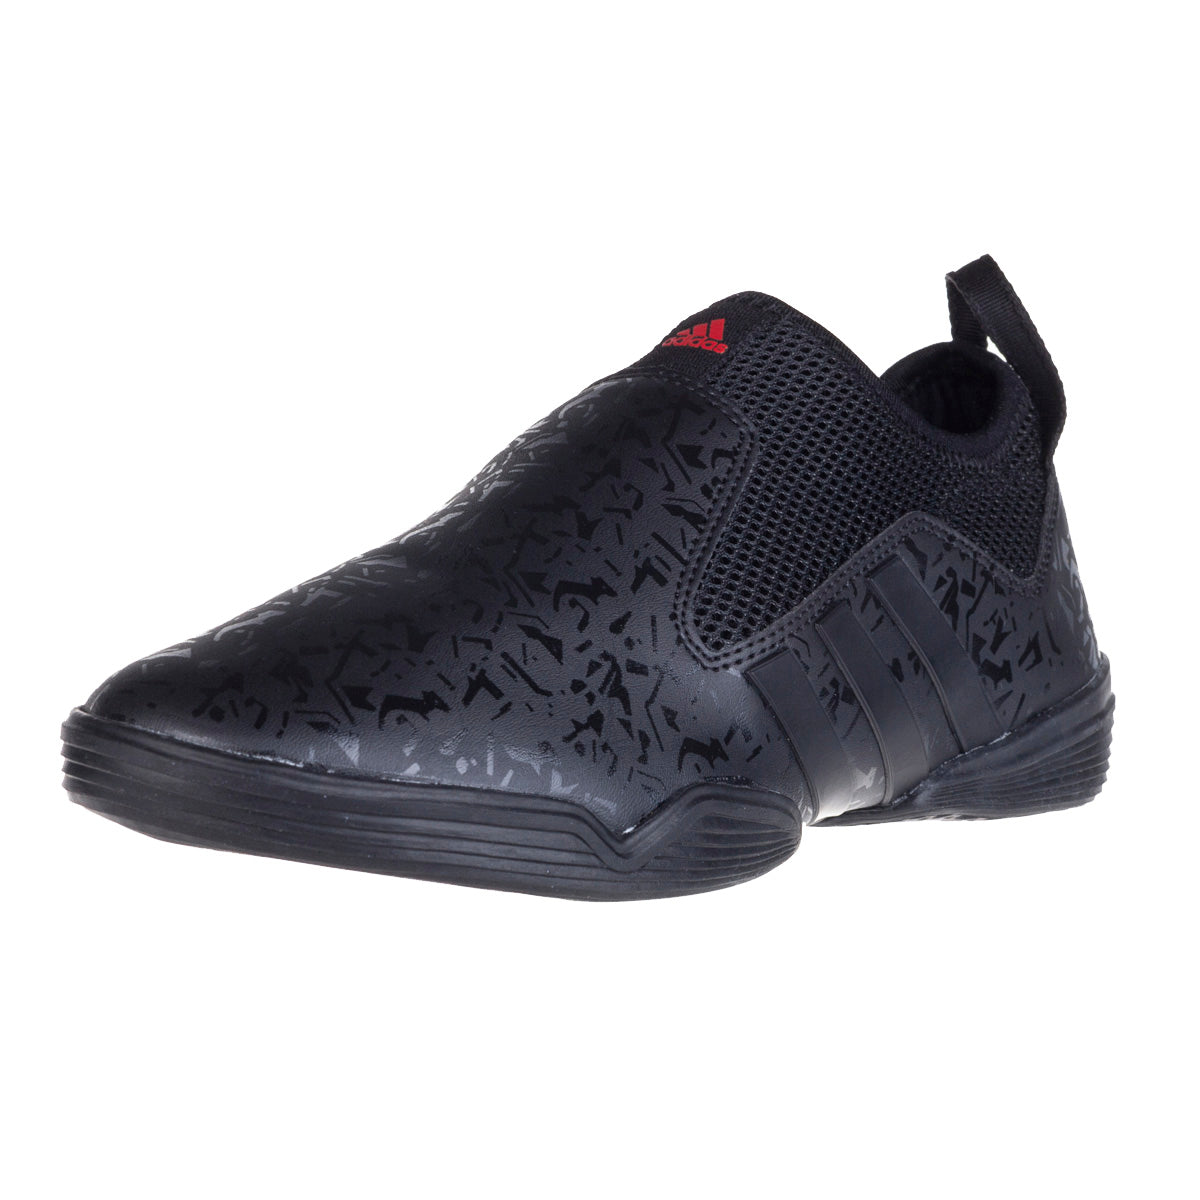 adidas chaussures ADI-BRAS 16 - noir, ADITBR01-BK